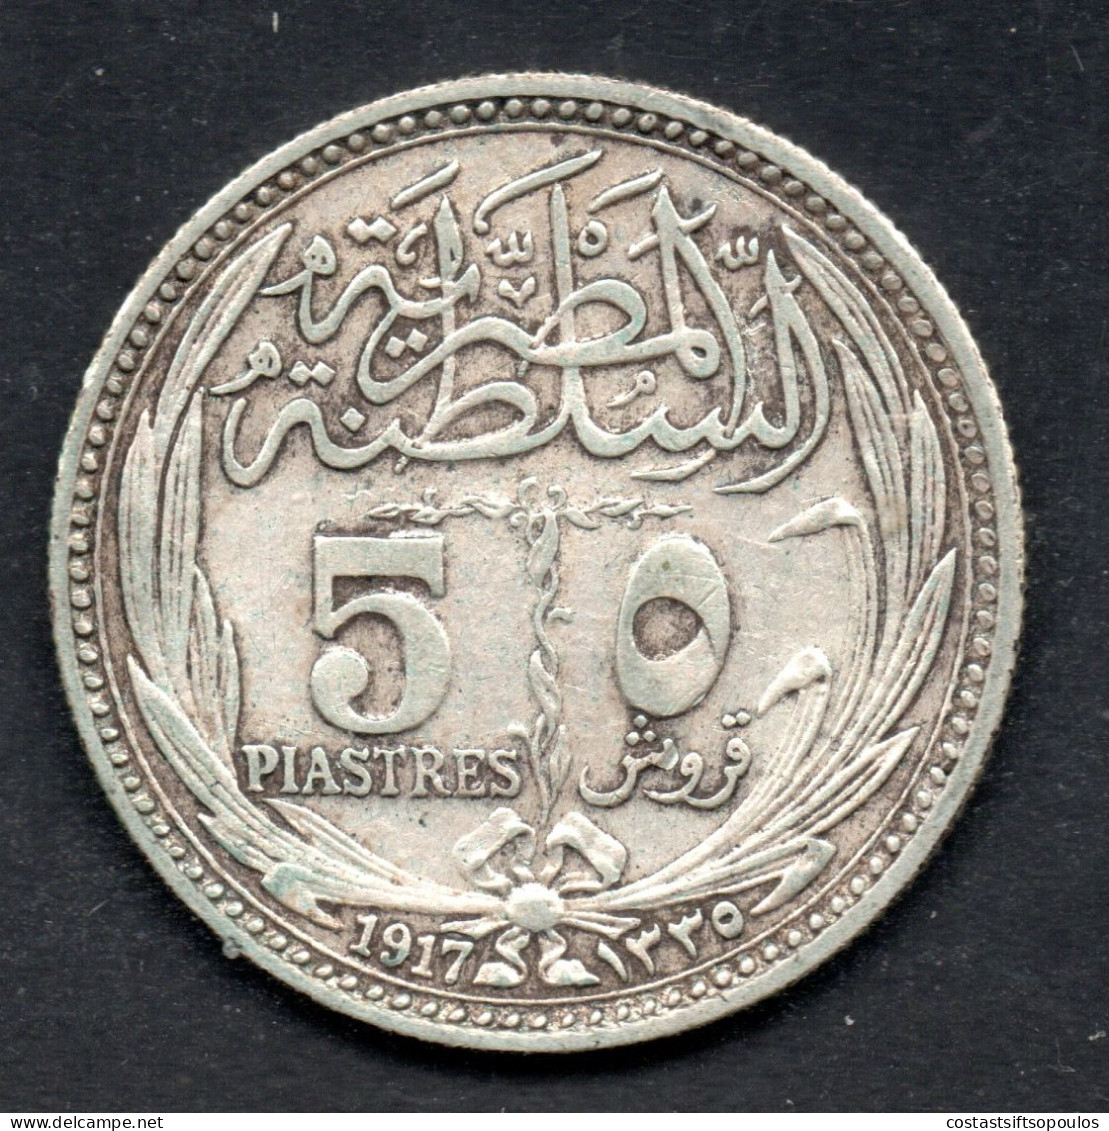 3106. EGYPT 1917 5 PIASTER VERY NICE SILVER COIN - Egypt